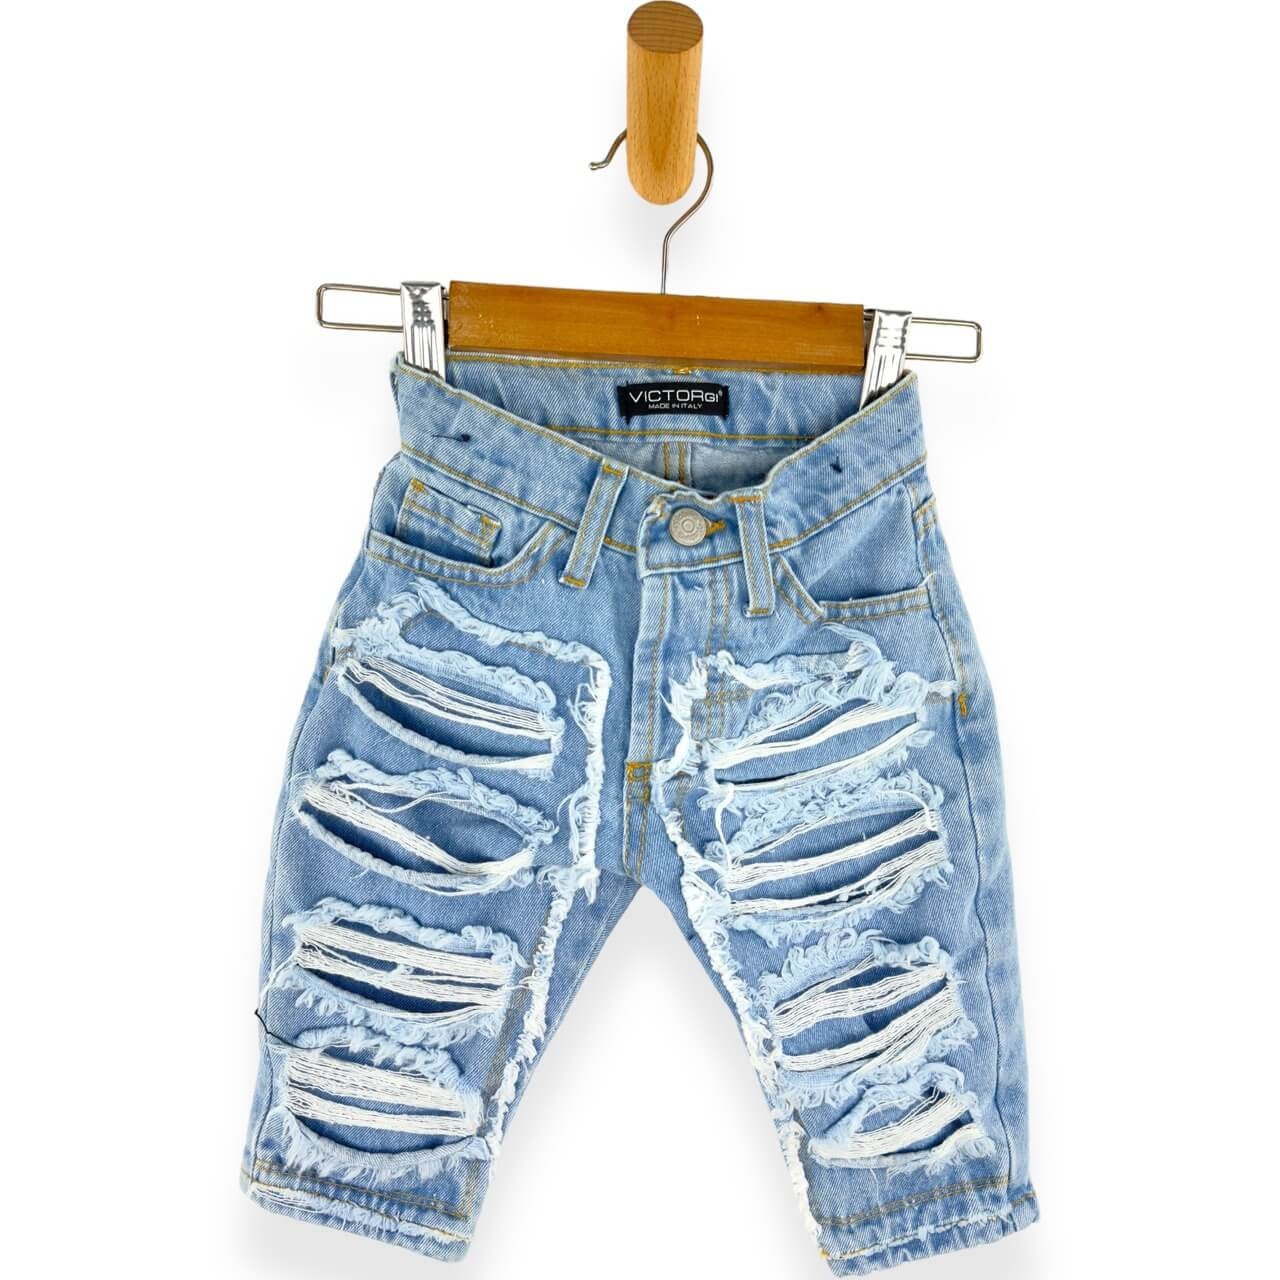 Neugeborenen-Jeans